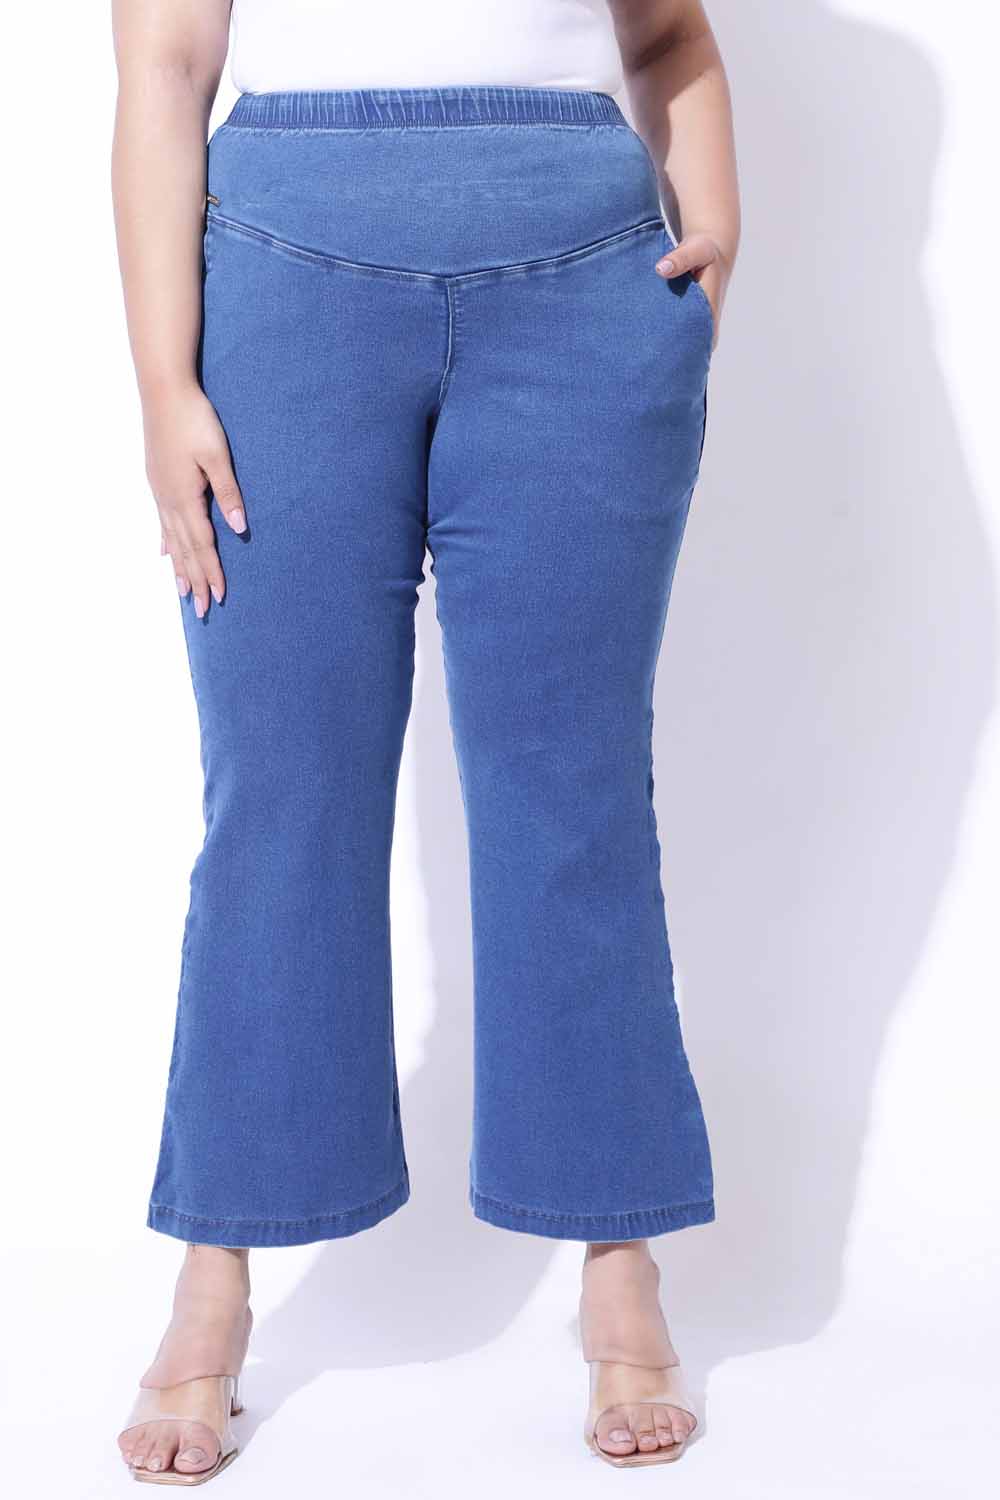 80s Mom Women's Jeans (plus Size) - Dark Wash